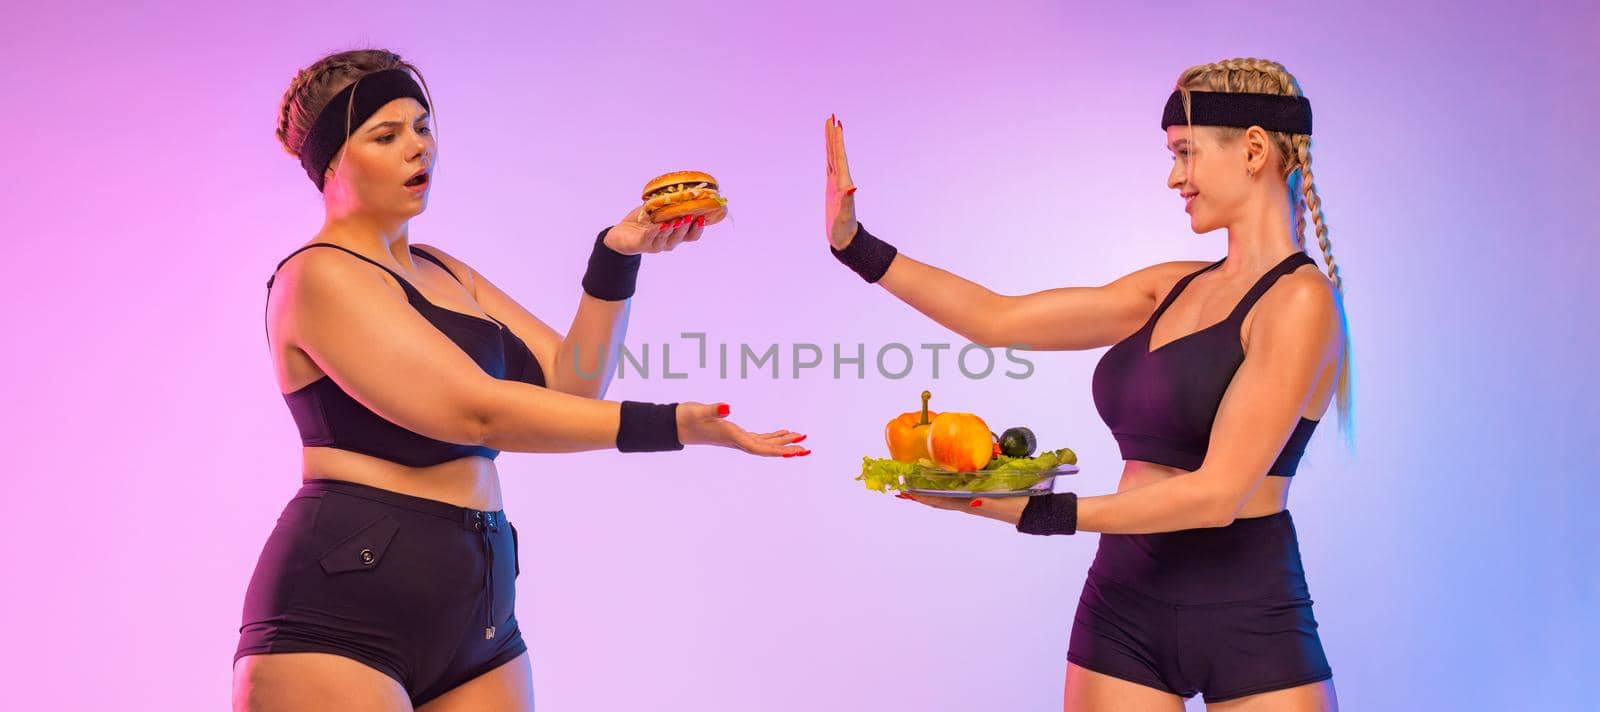 Fat Girl Size Plus Model Change Fast Food Burger On Proper Nutrition Of Vegetables. Vegans Health Food. Meat versus vegetables. Idea for a social media post on the topic of dietetics